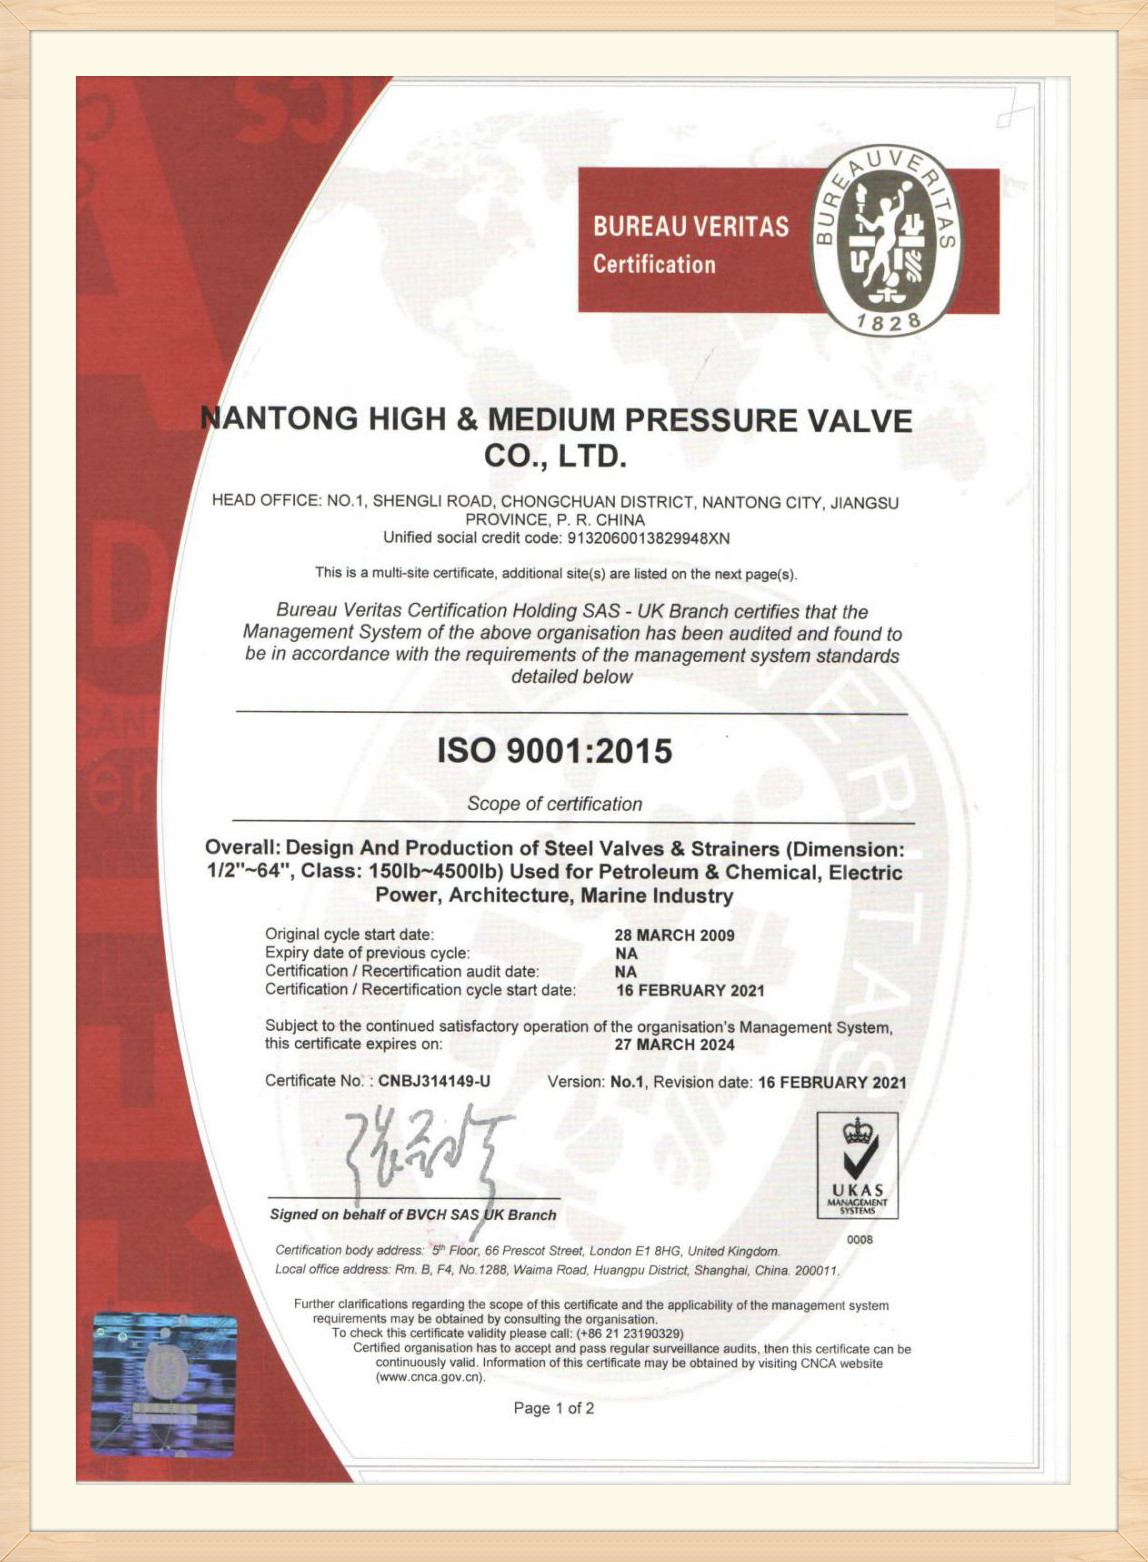 Nantong 고압 및 중간 압력 밸브 Co., Ltd.